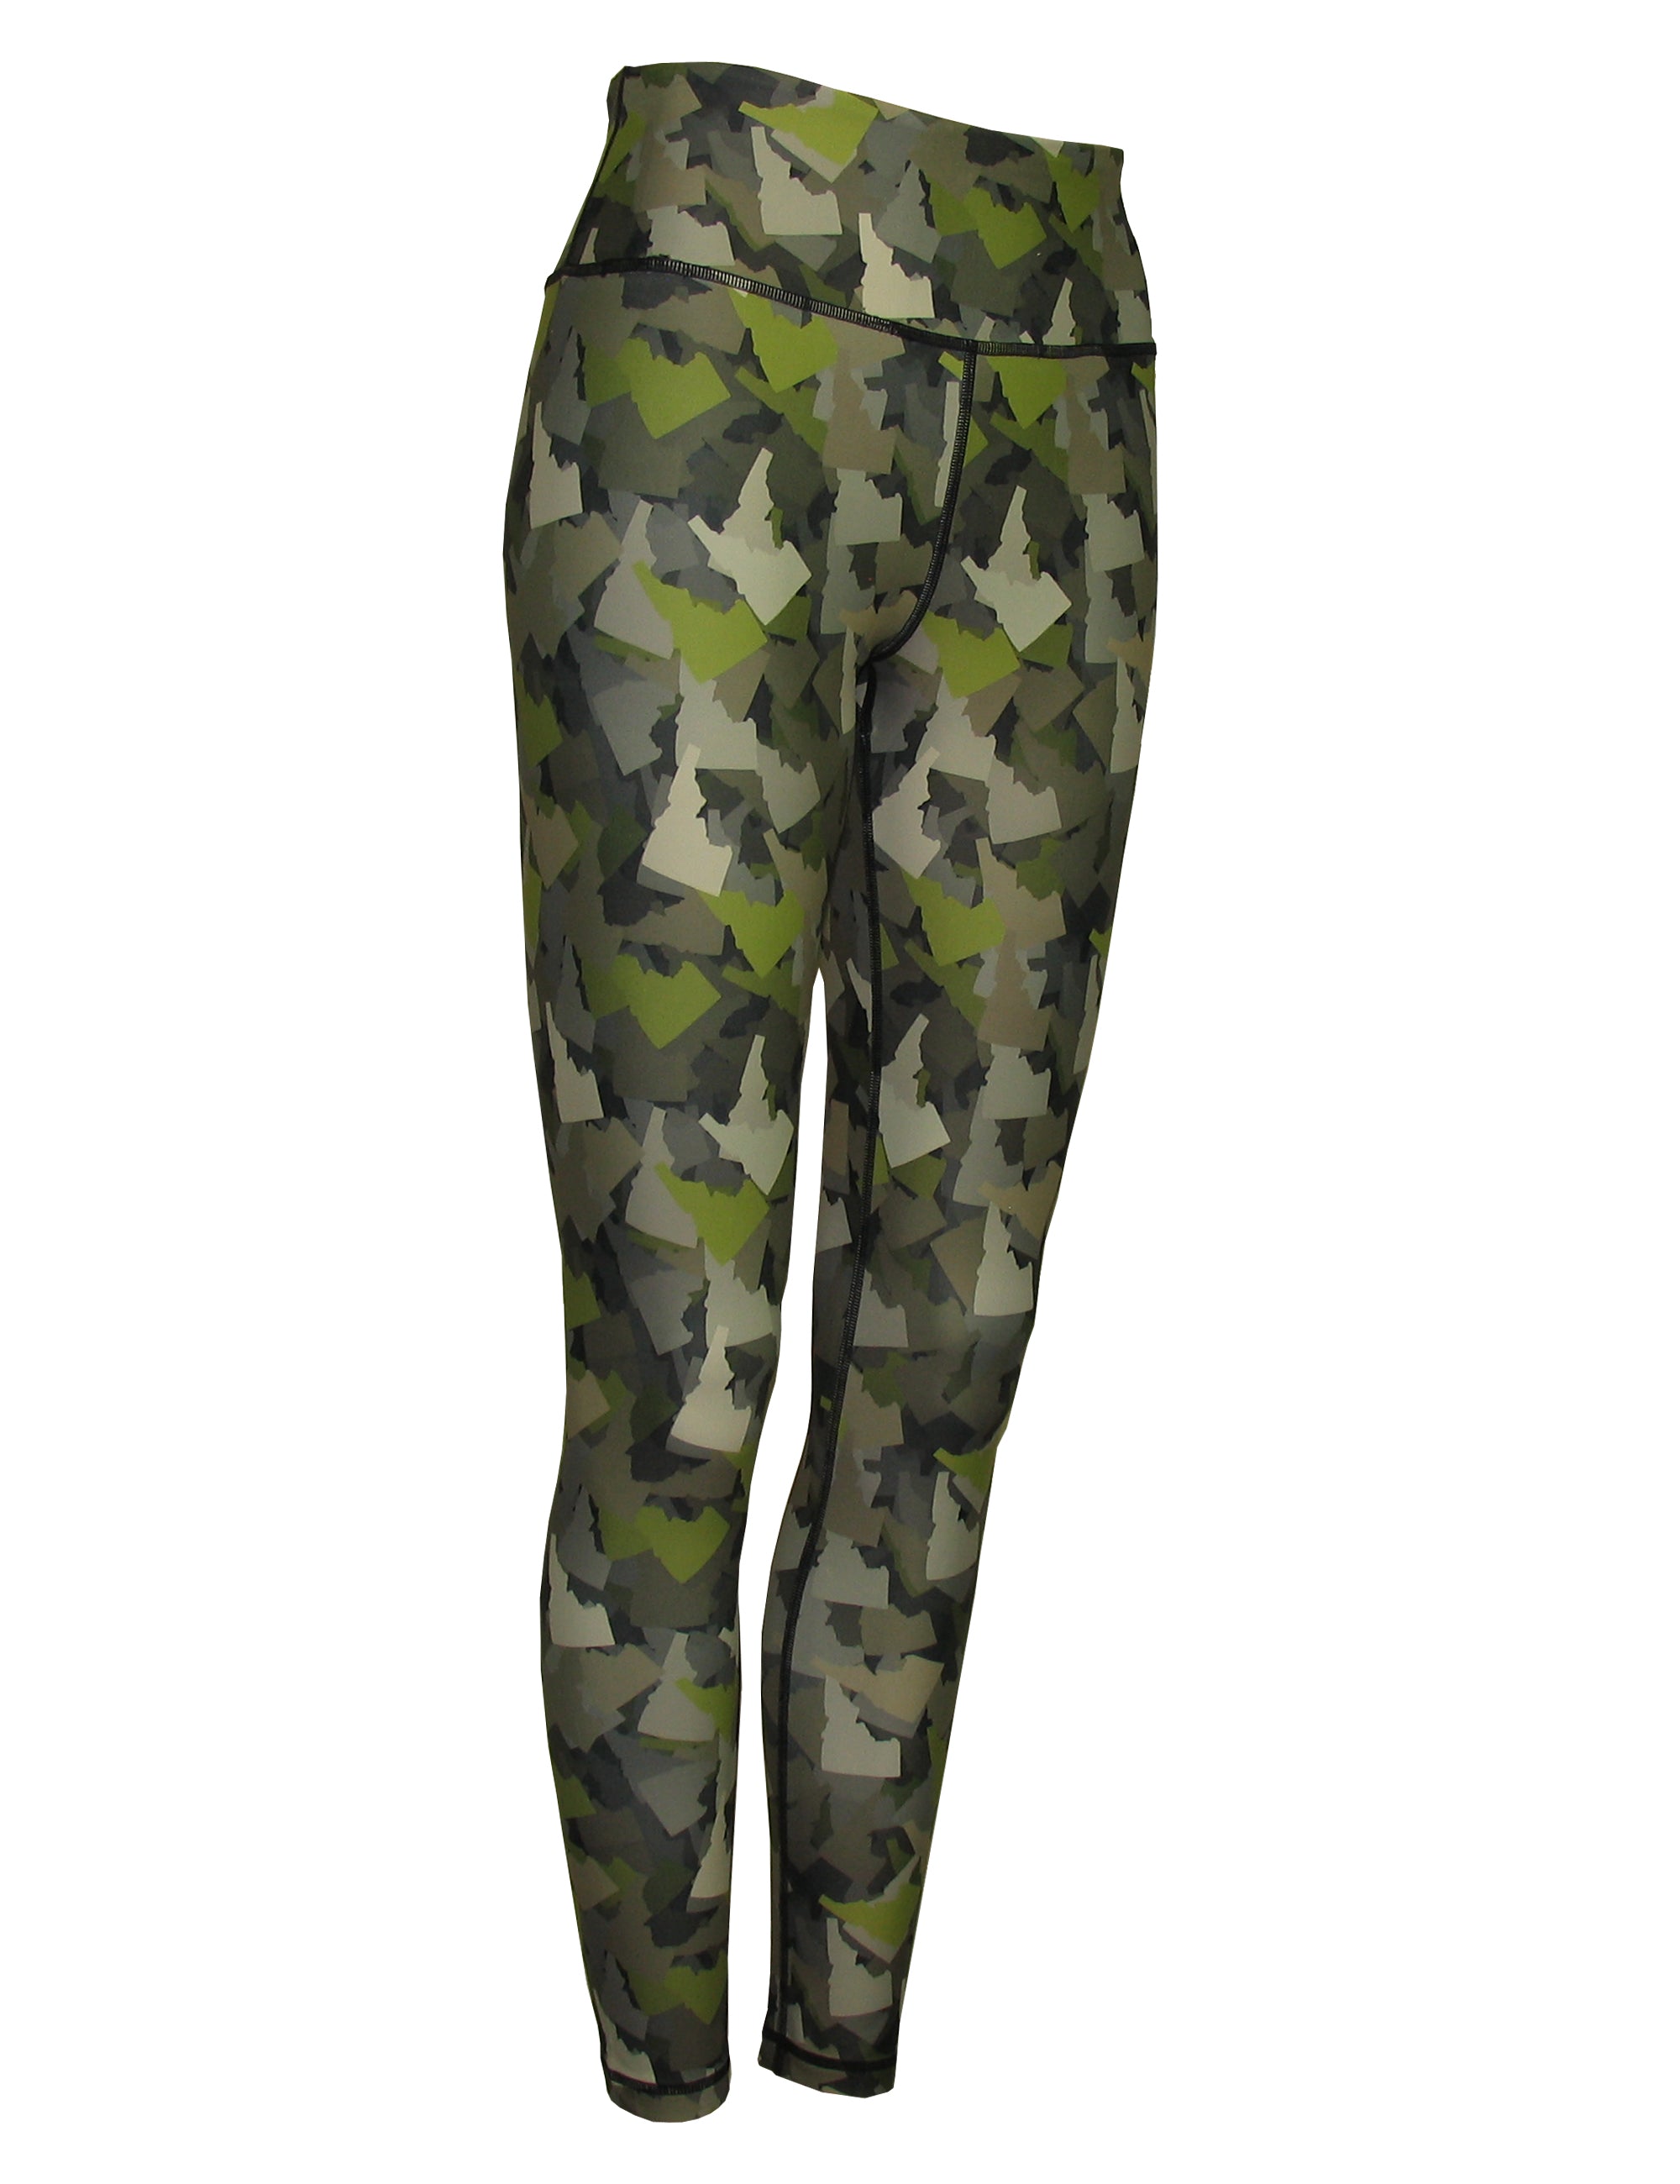 Fitness Leggings Women, Camouflage Clothing